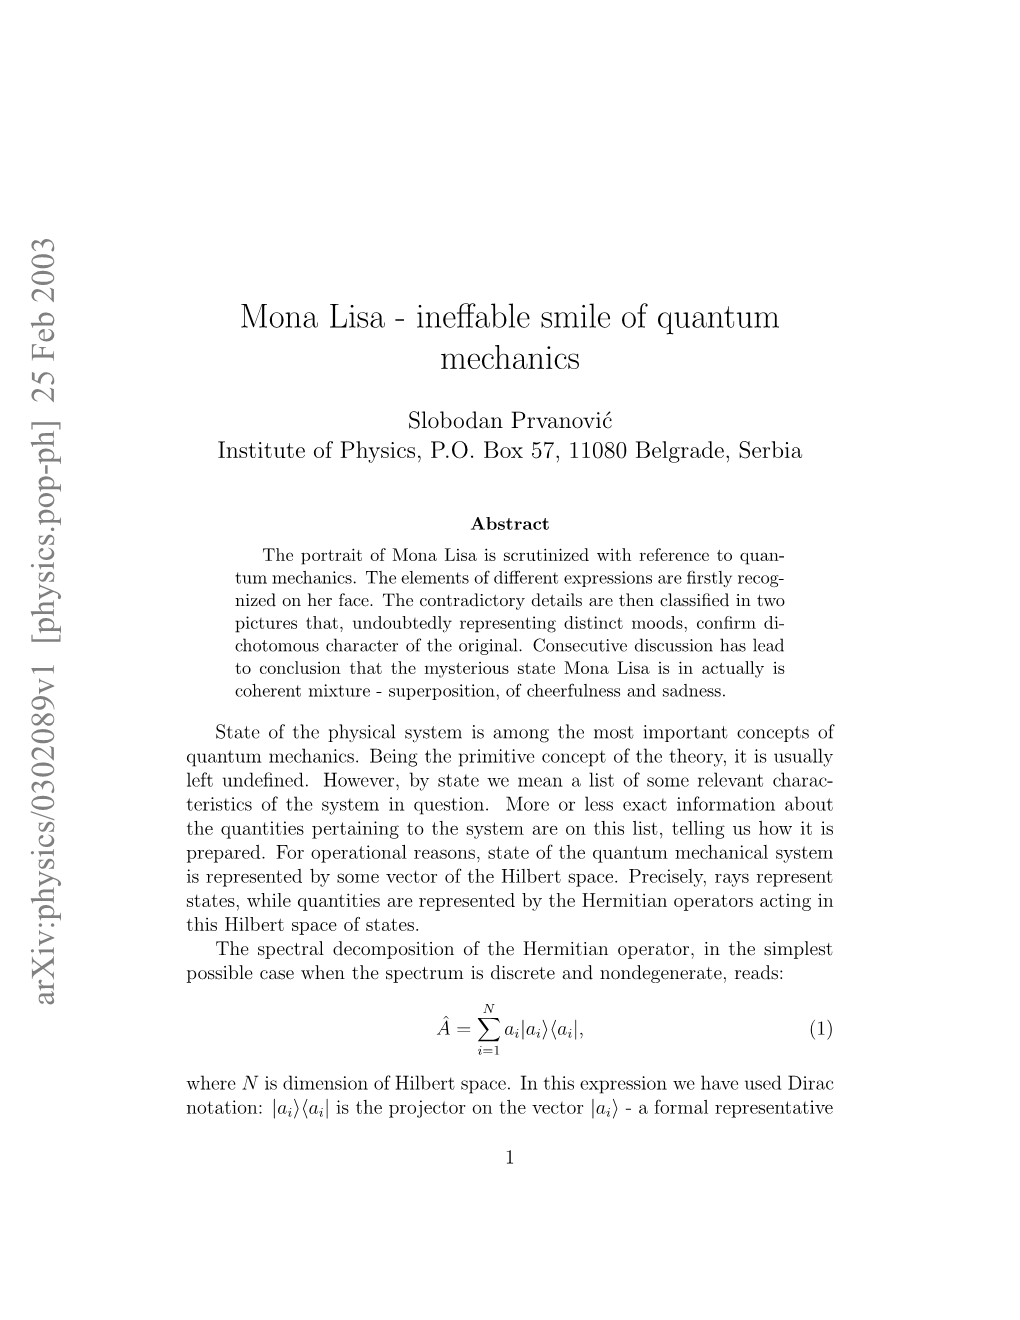 Mona Lisa-Ineffable Smile of Quantum Mechanics